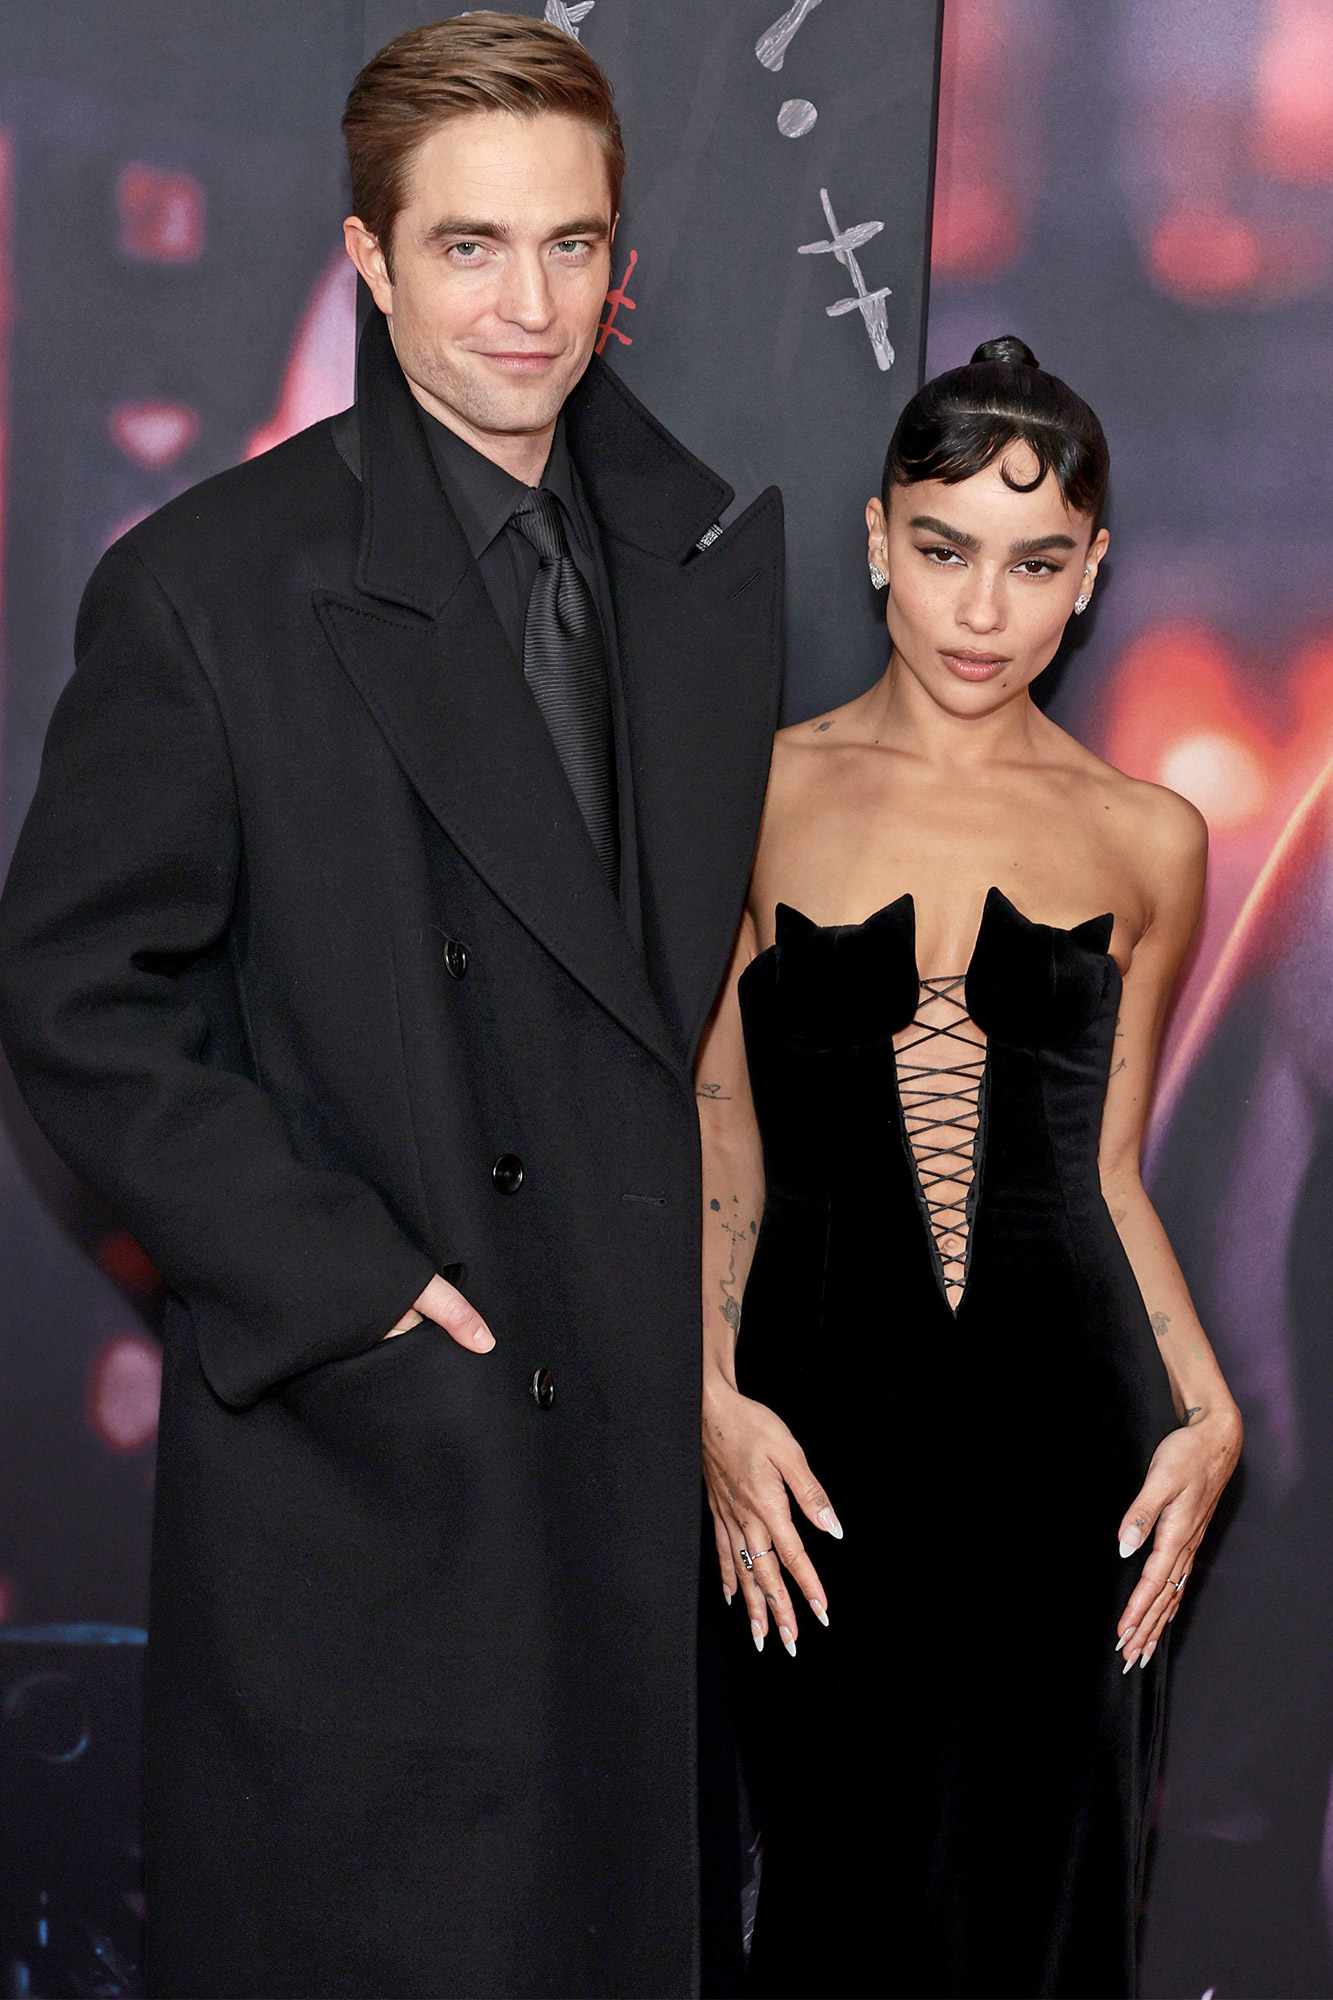 Robert Pattinson and Zoë Kravitz